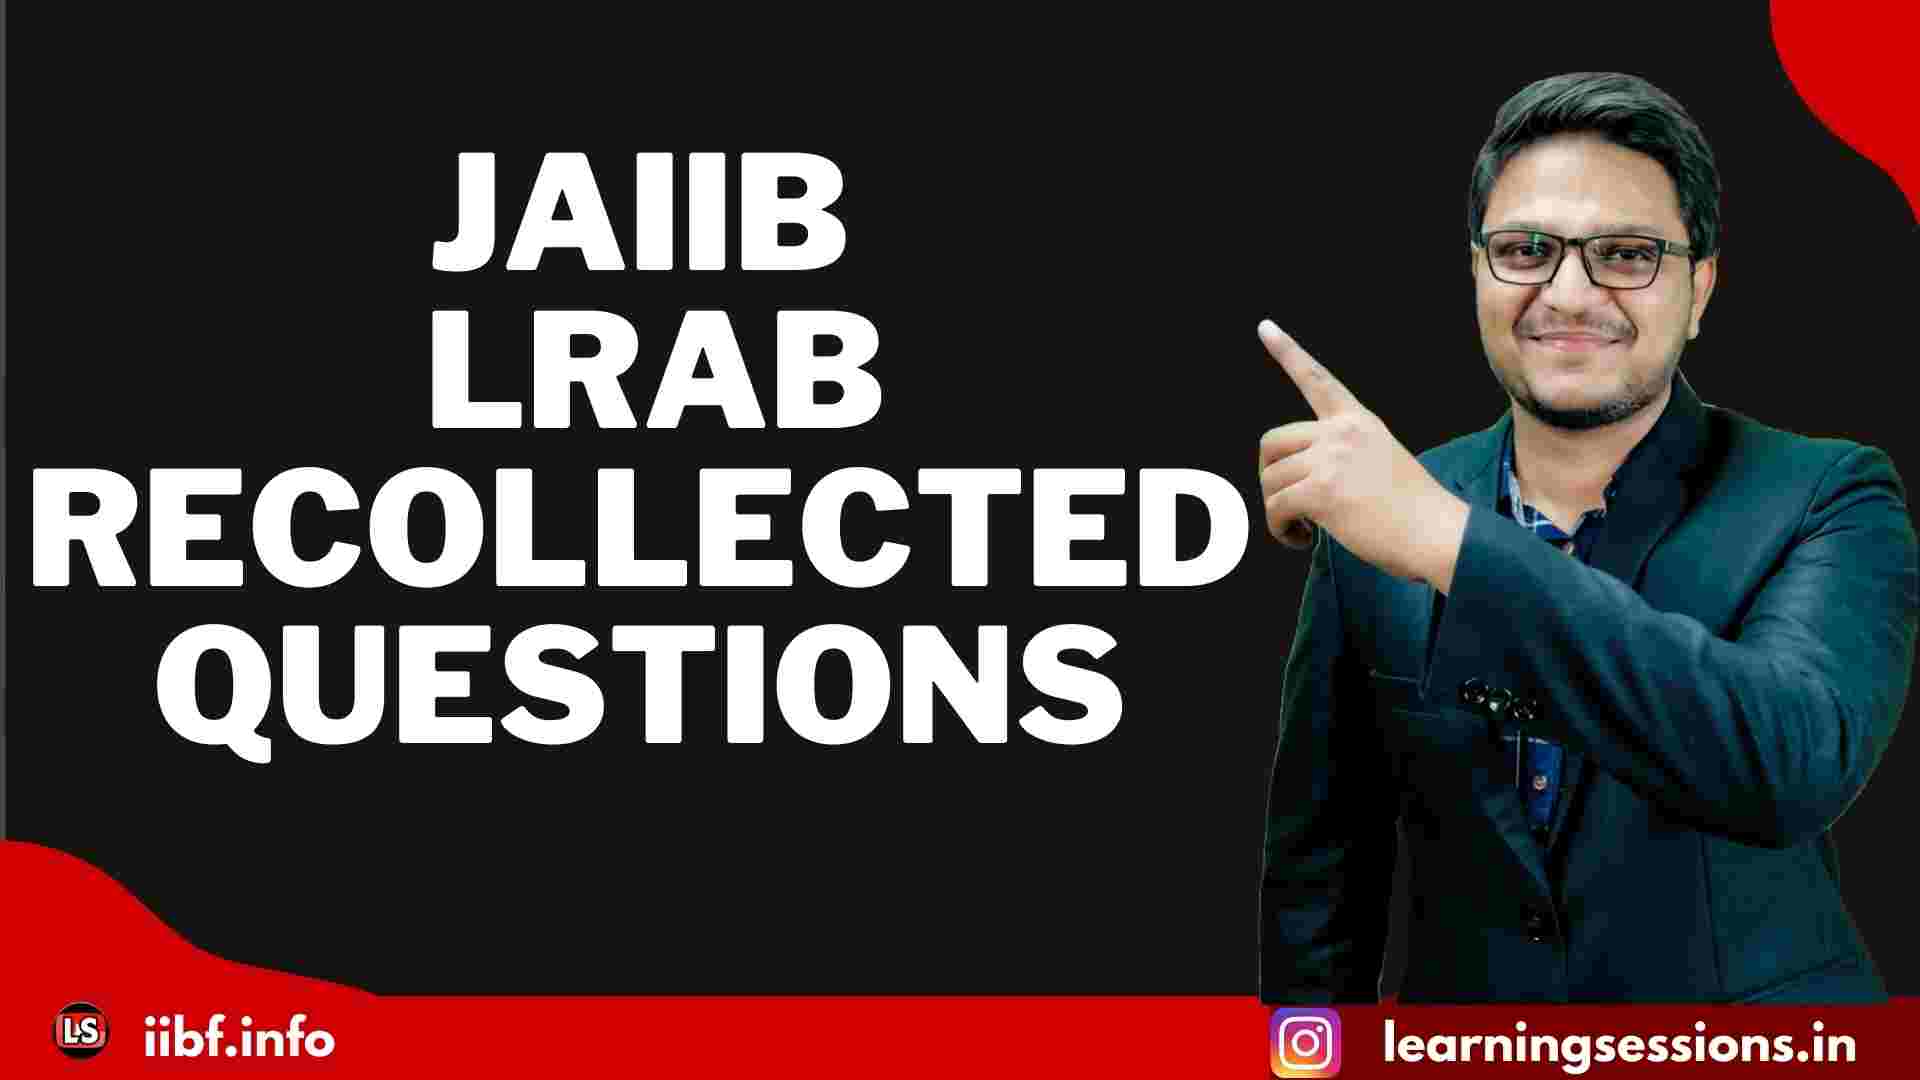 IIBF JAIIB LRAB RECOLLECTED QUESTIONS FOR 2021-2022 EXAM